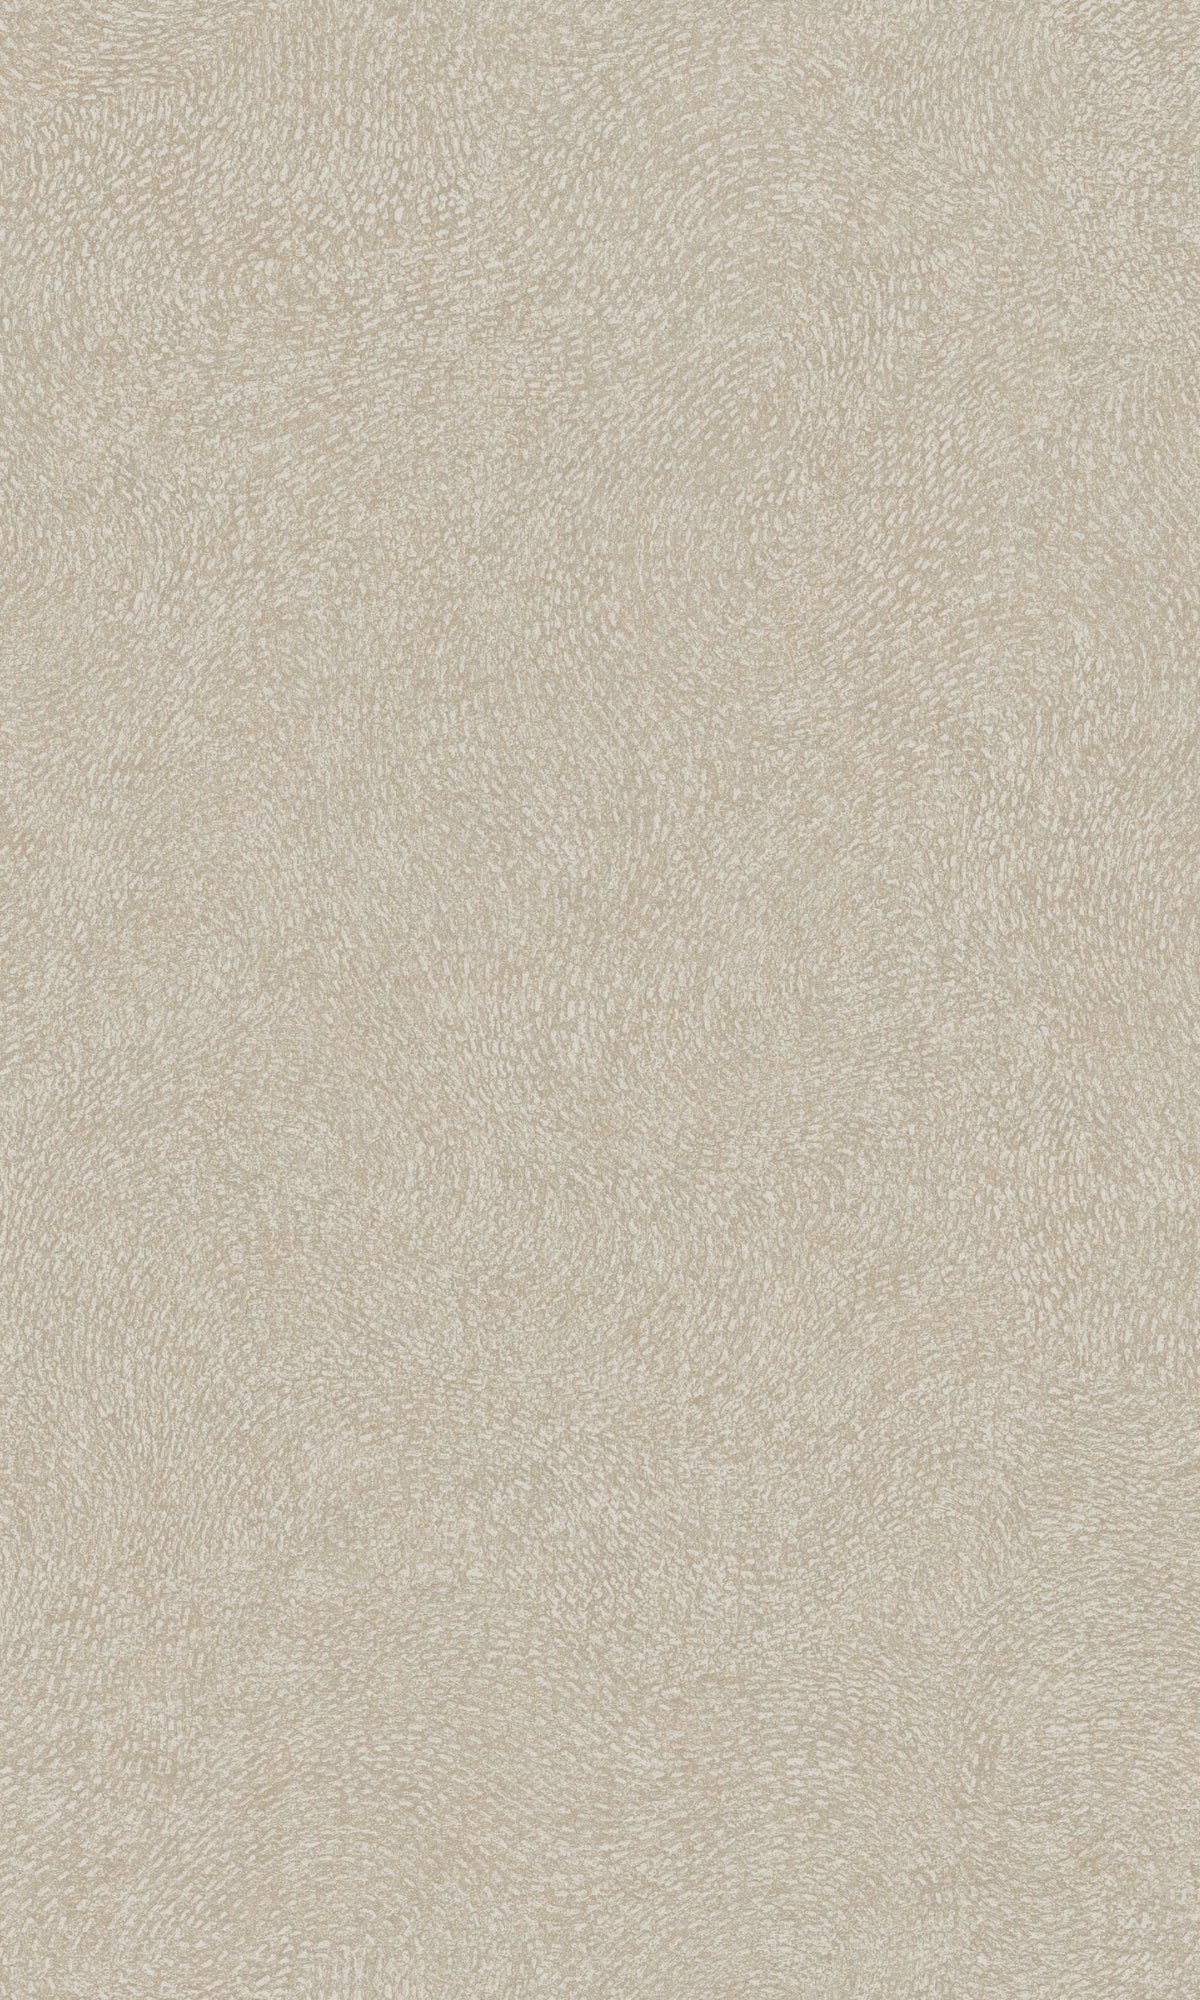 Beige Abstract Textured Plain Wallpaper R9365